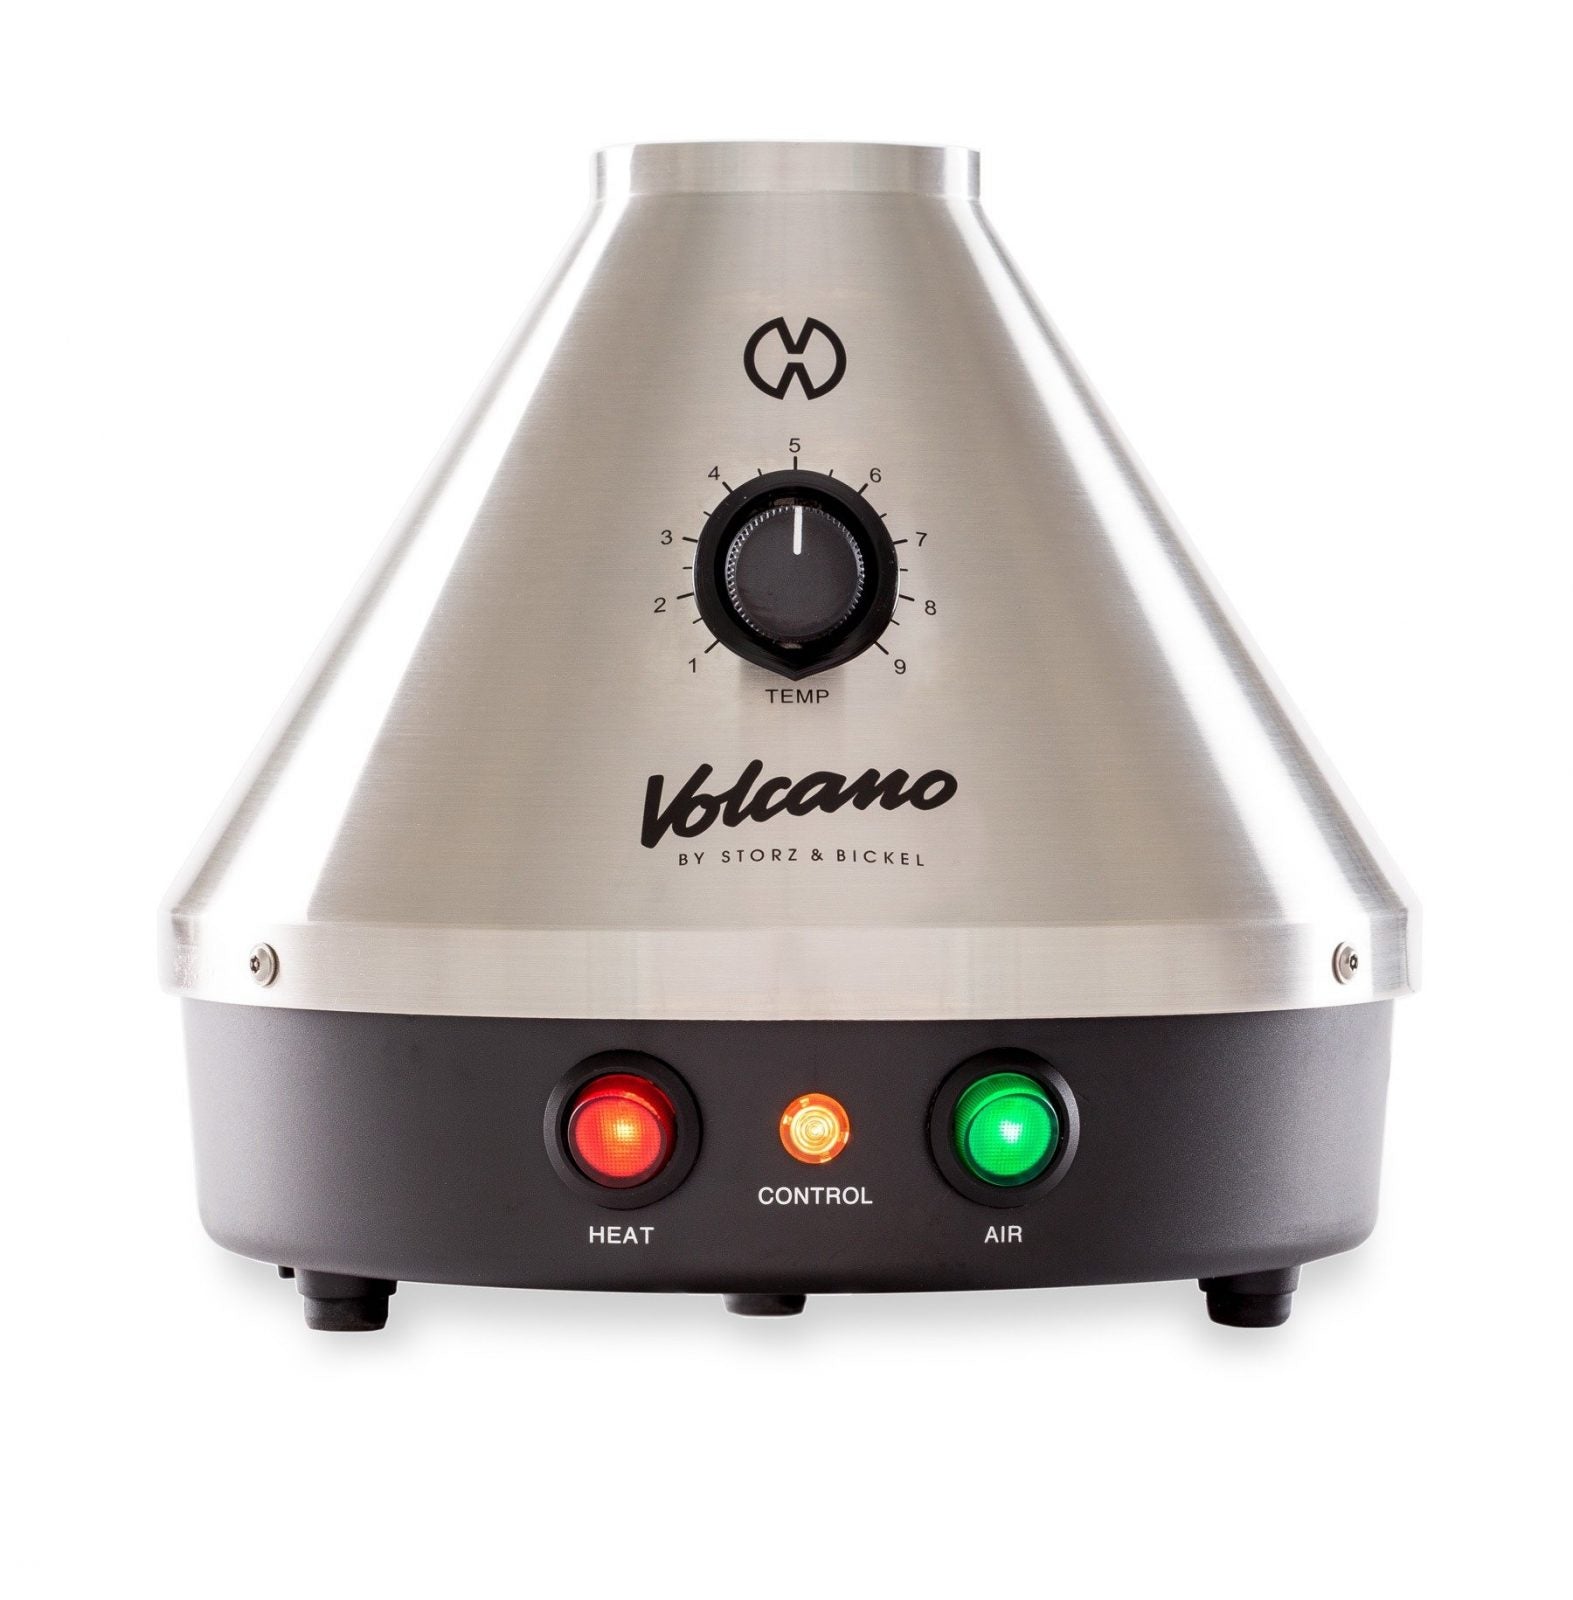 Kit Solid Valve Starter Set para vaporizador Volcano